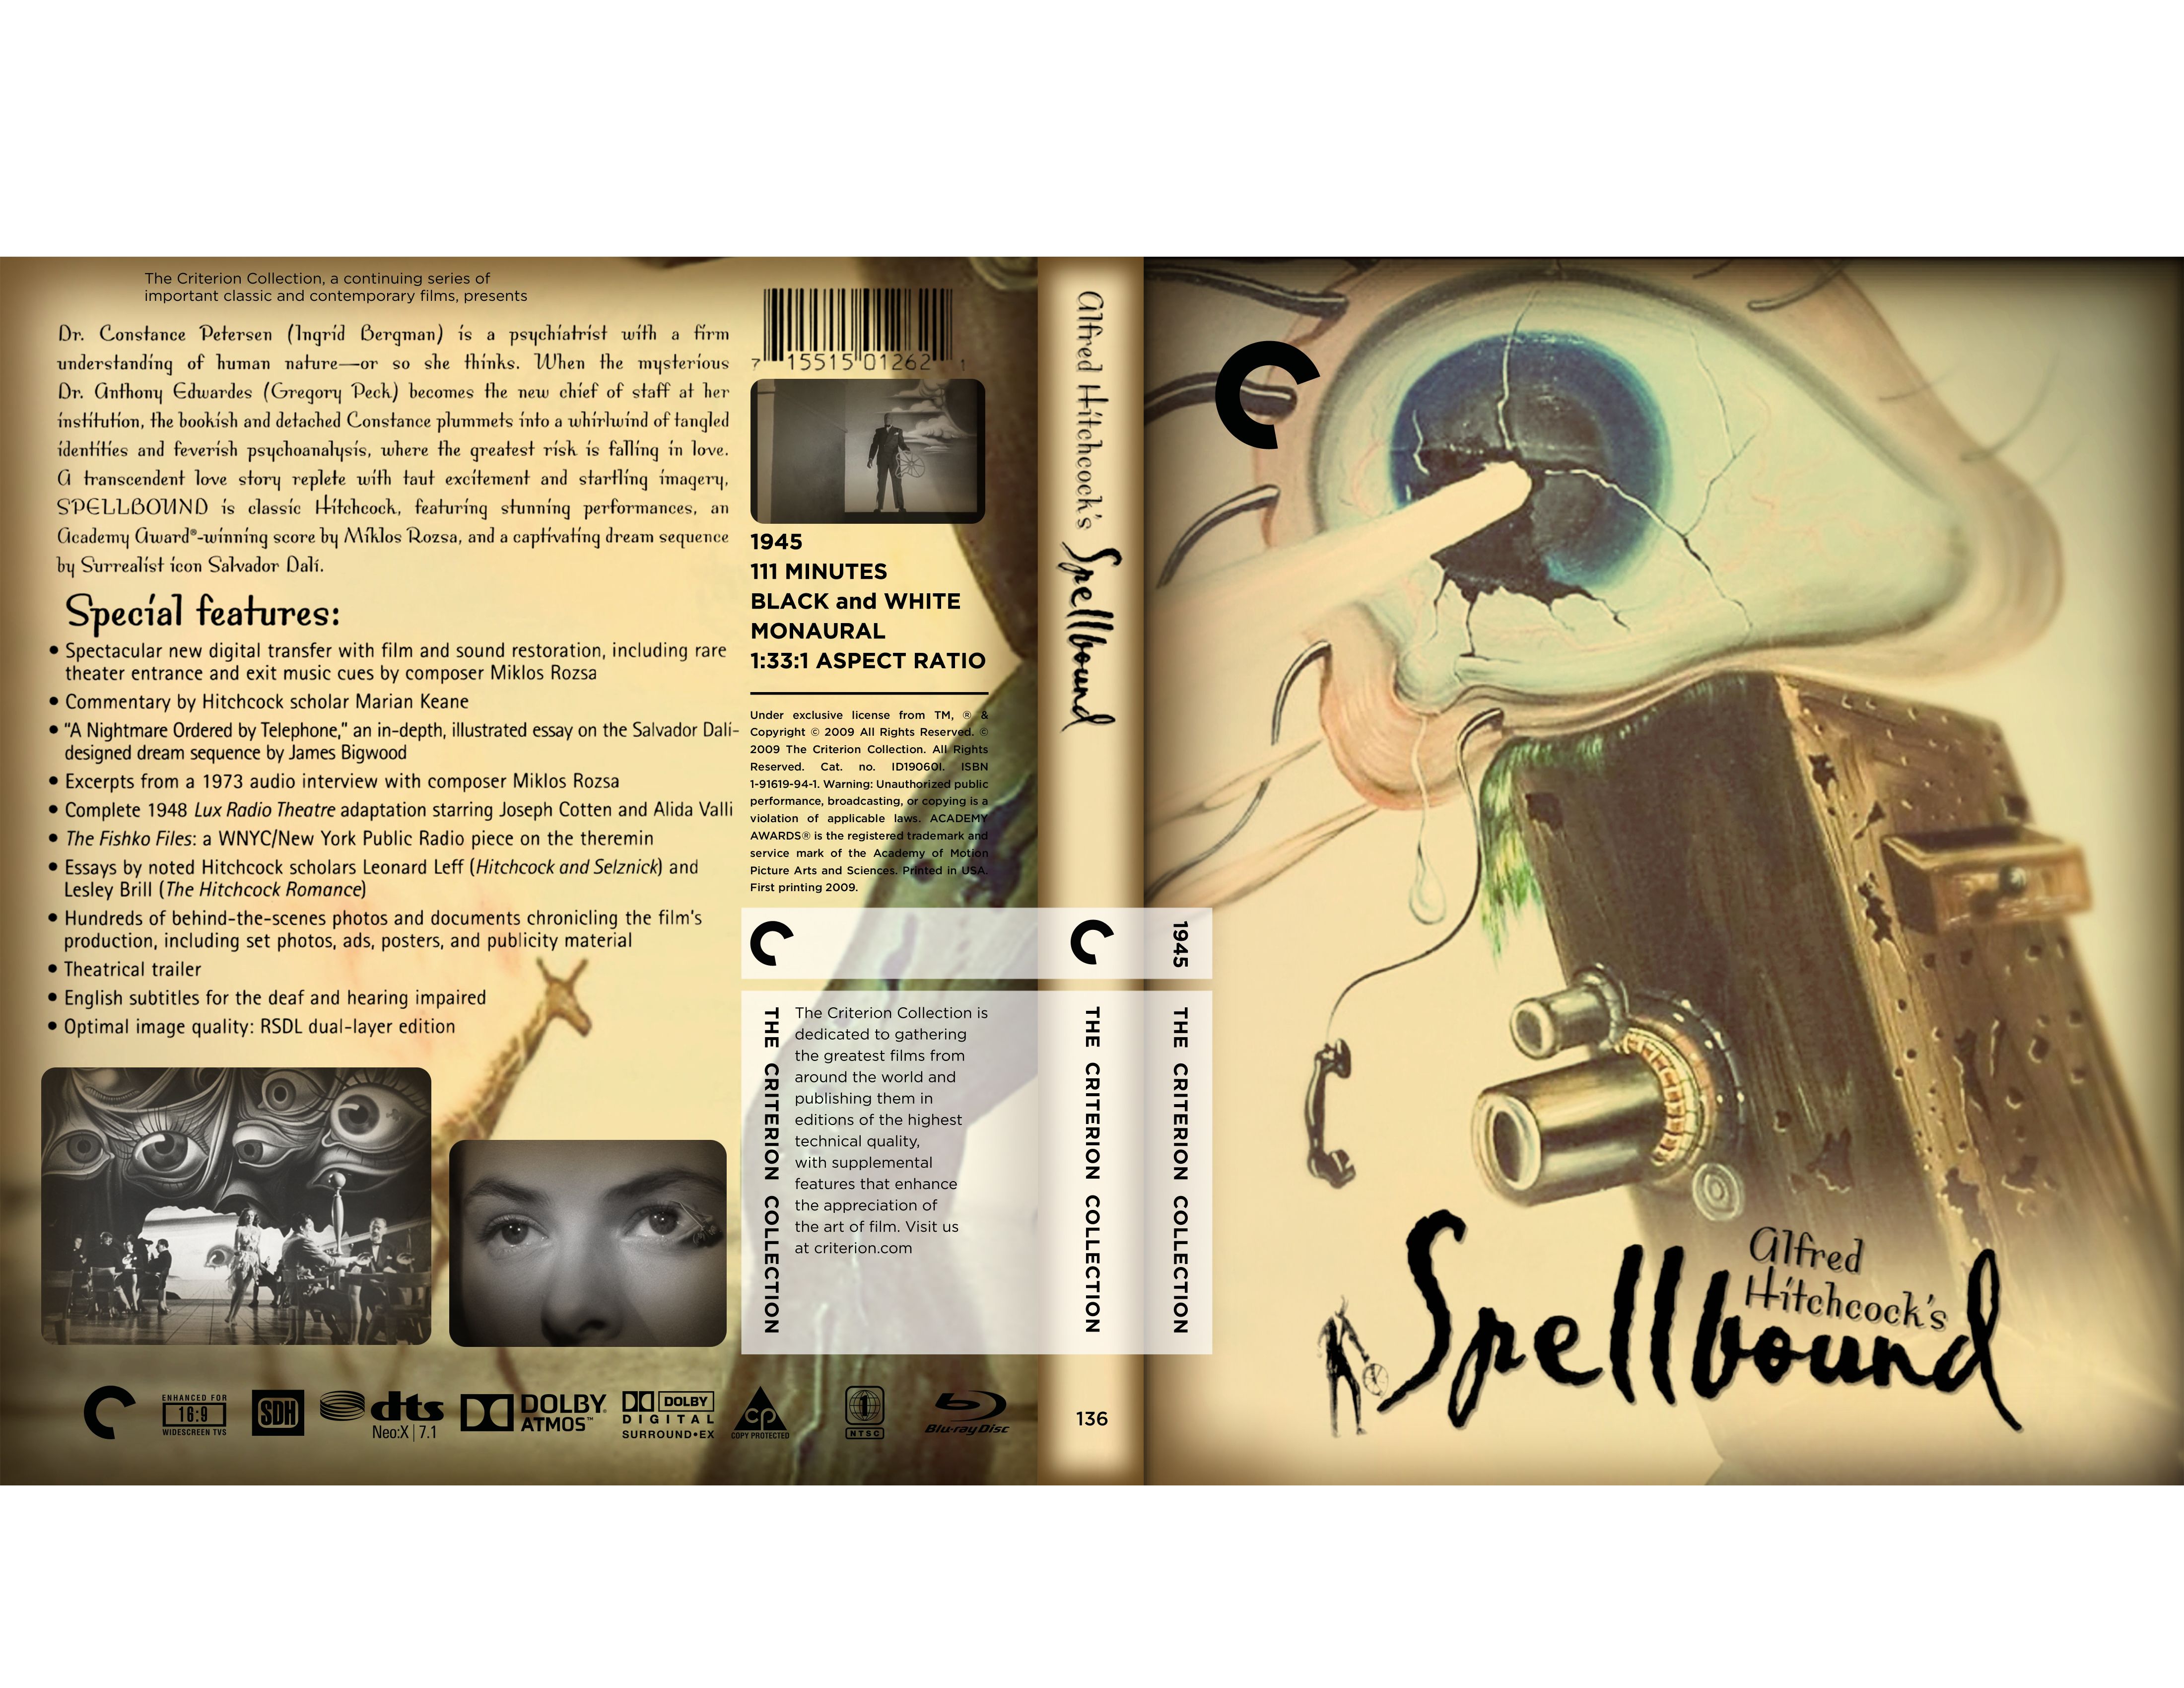 SpellBound Criterion BluRay Cover Printout.jpg